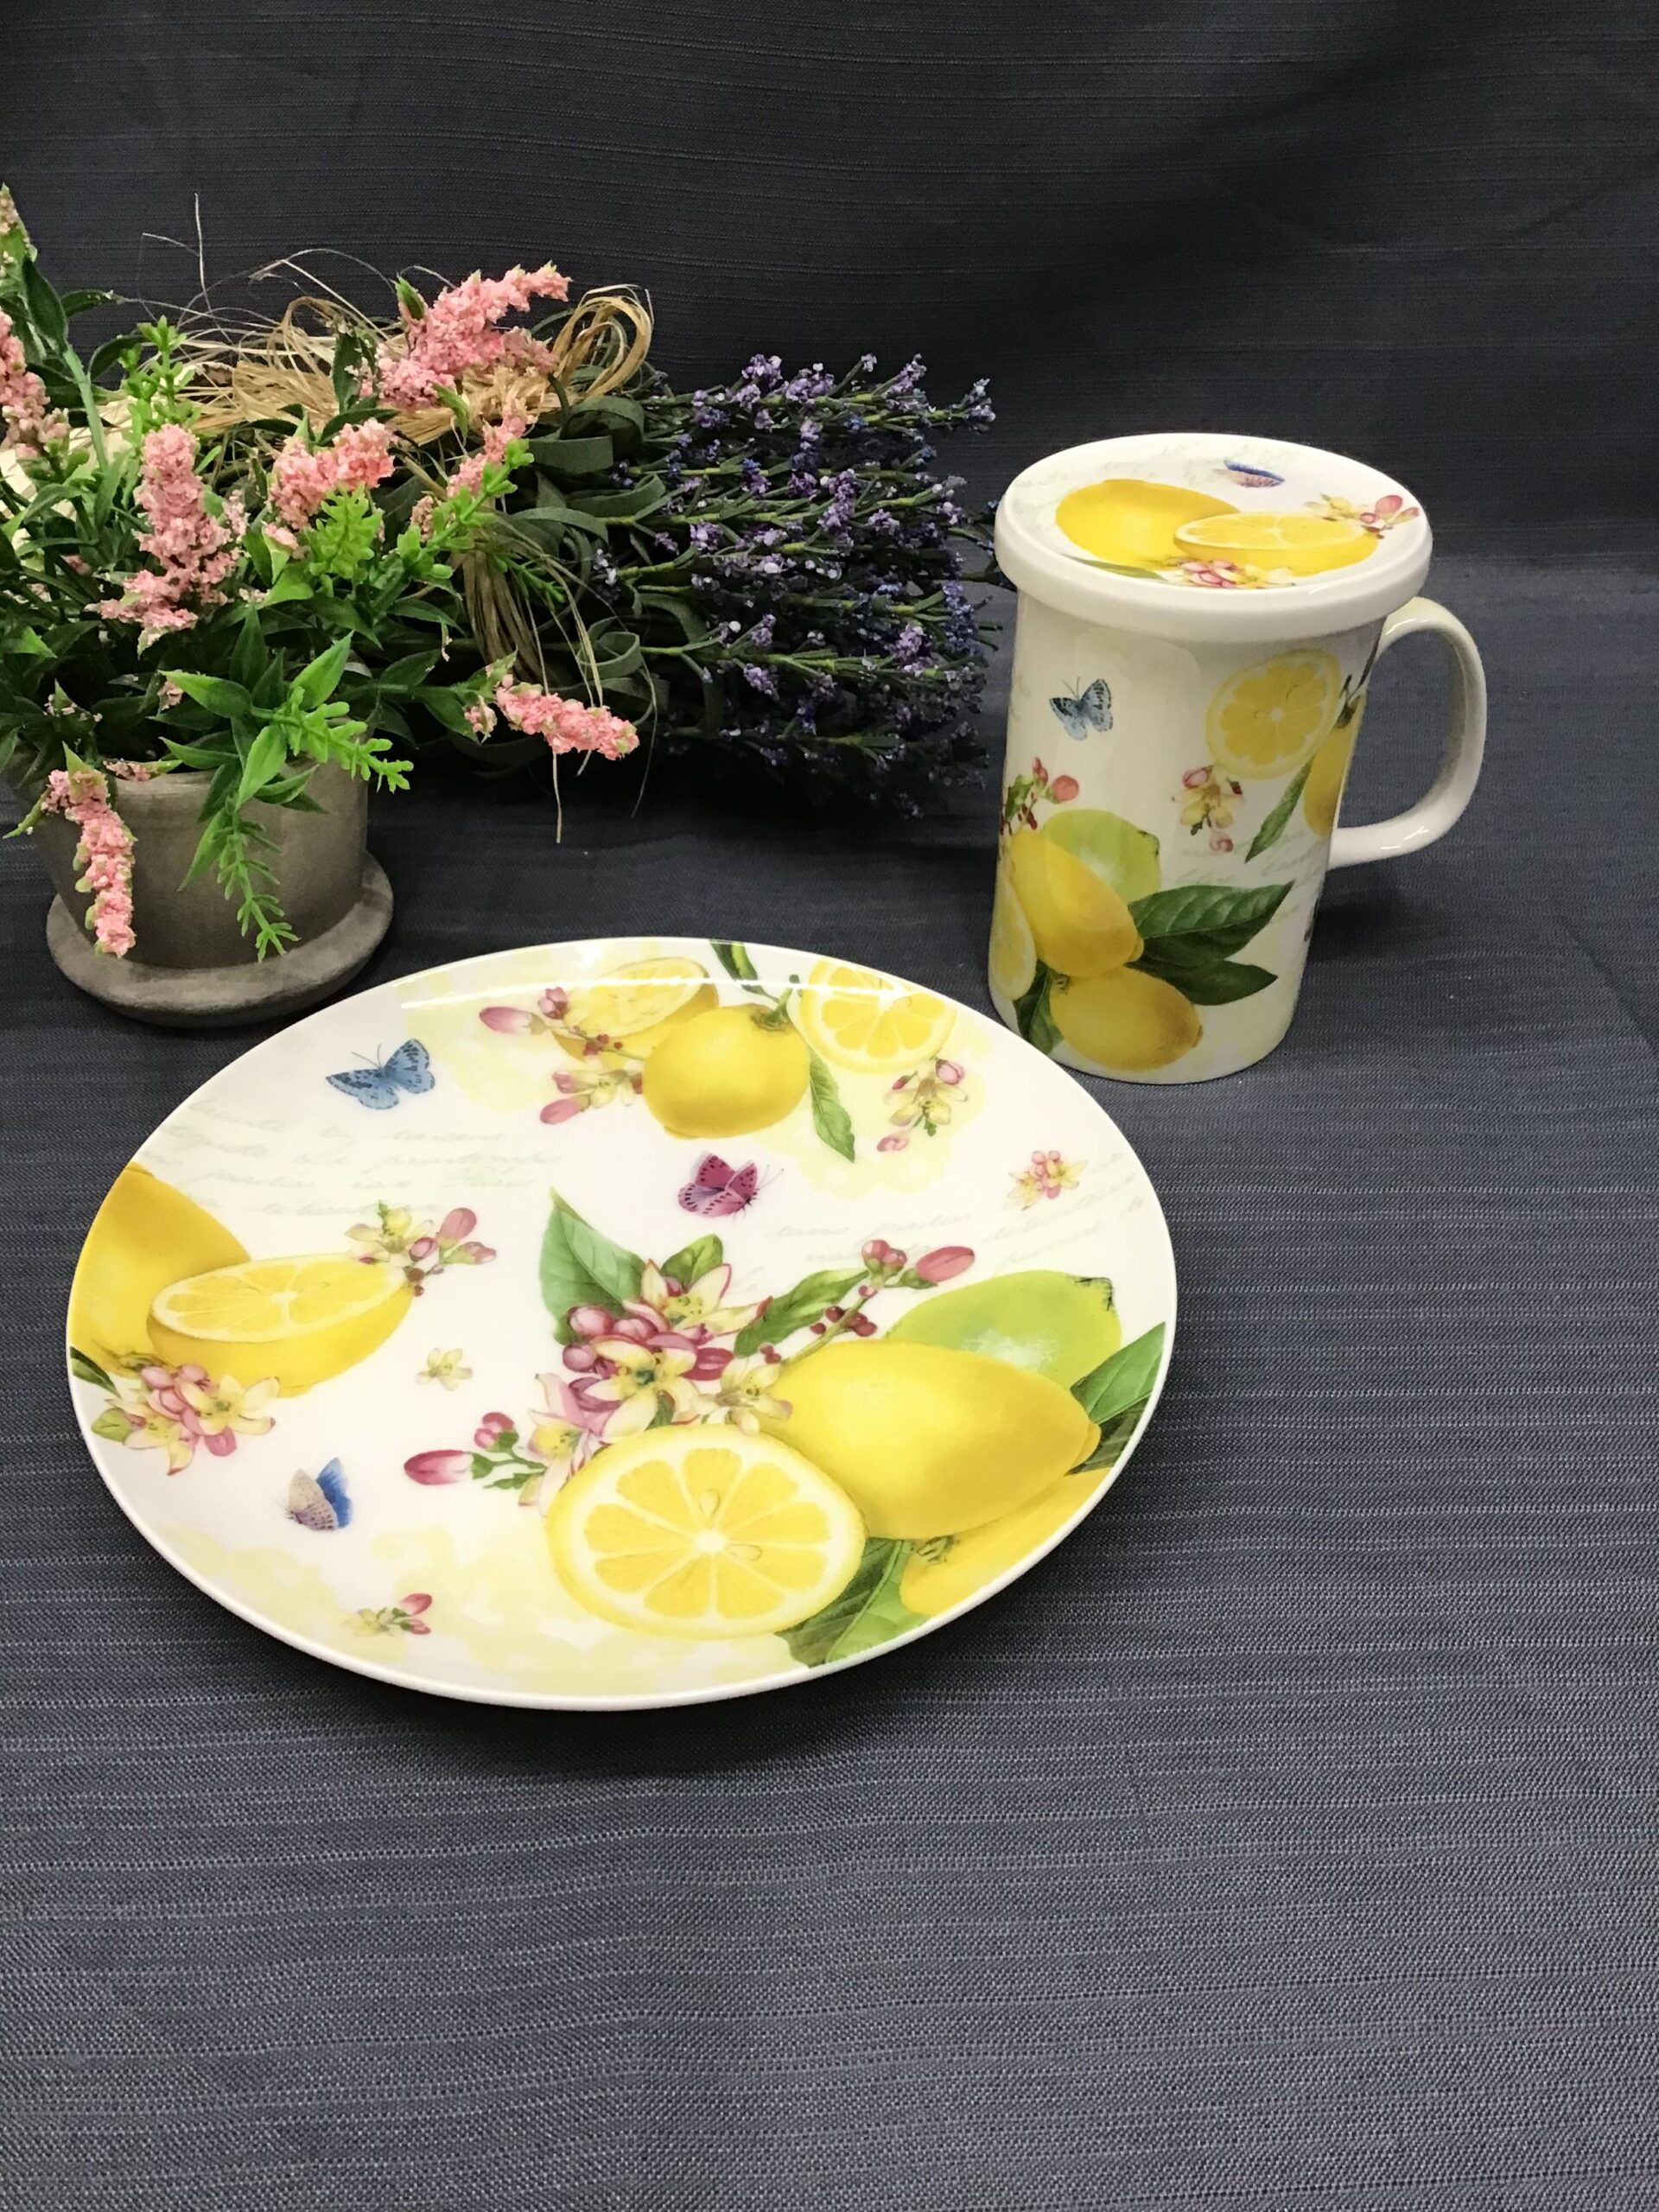 DORA PAPIS “Lemon” Infuser Tea Mug & Snack Plate